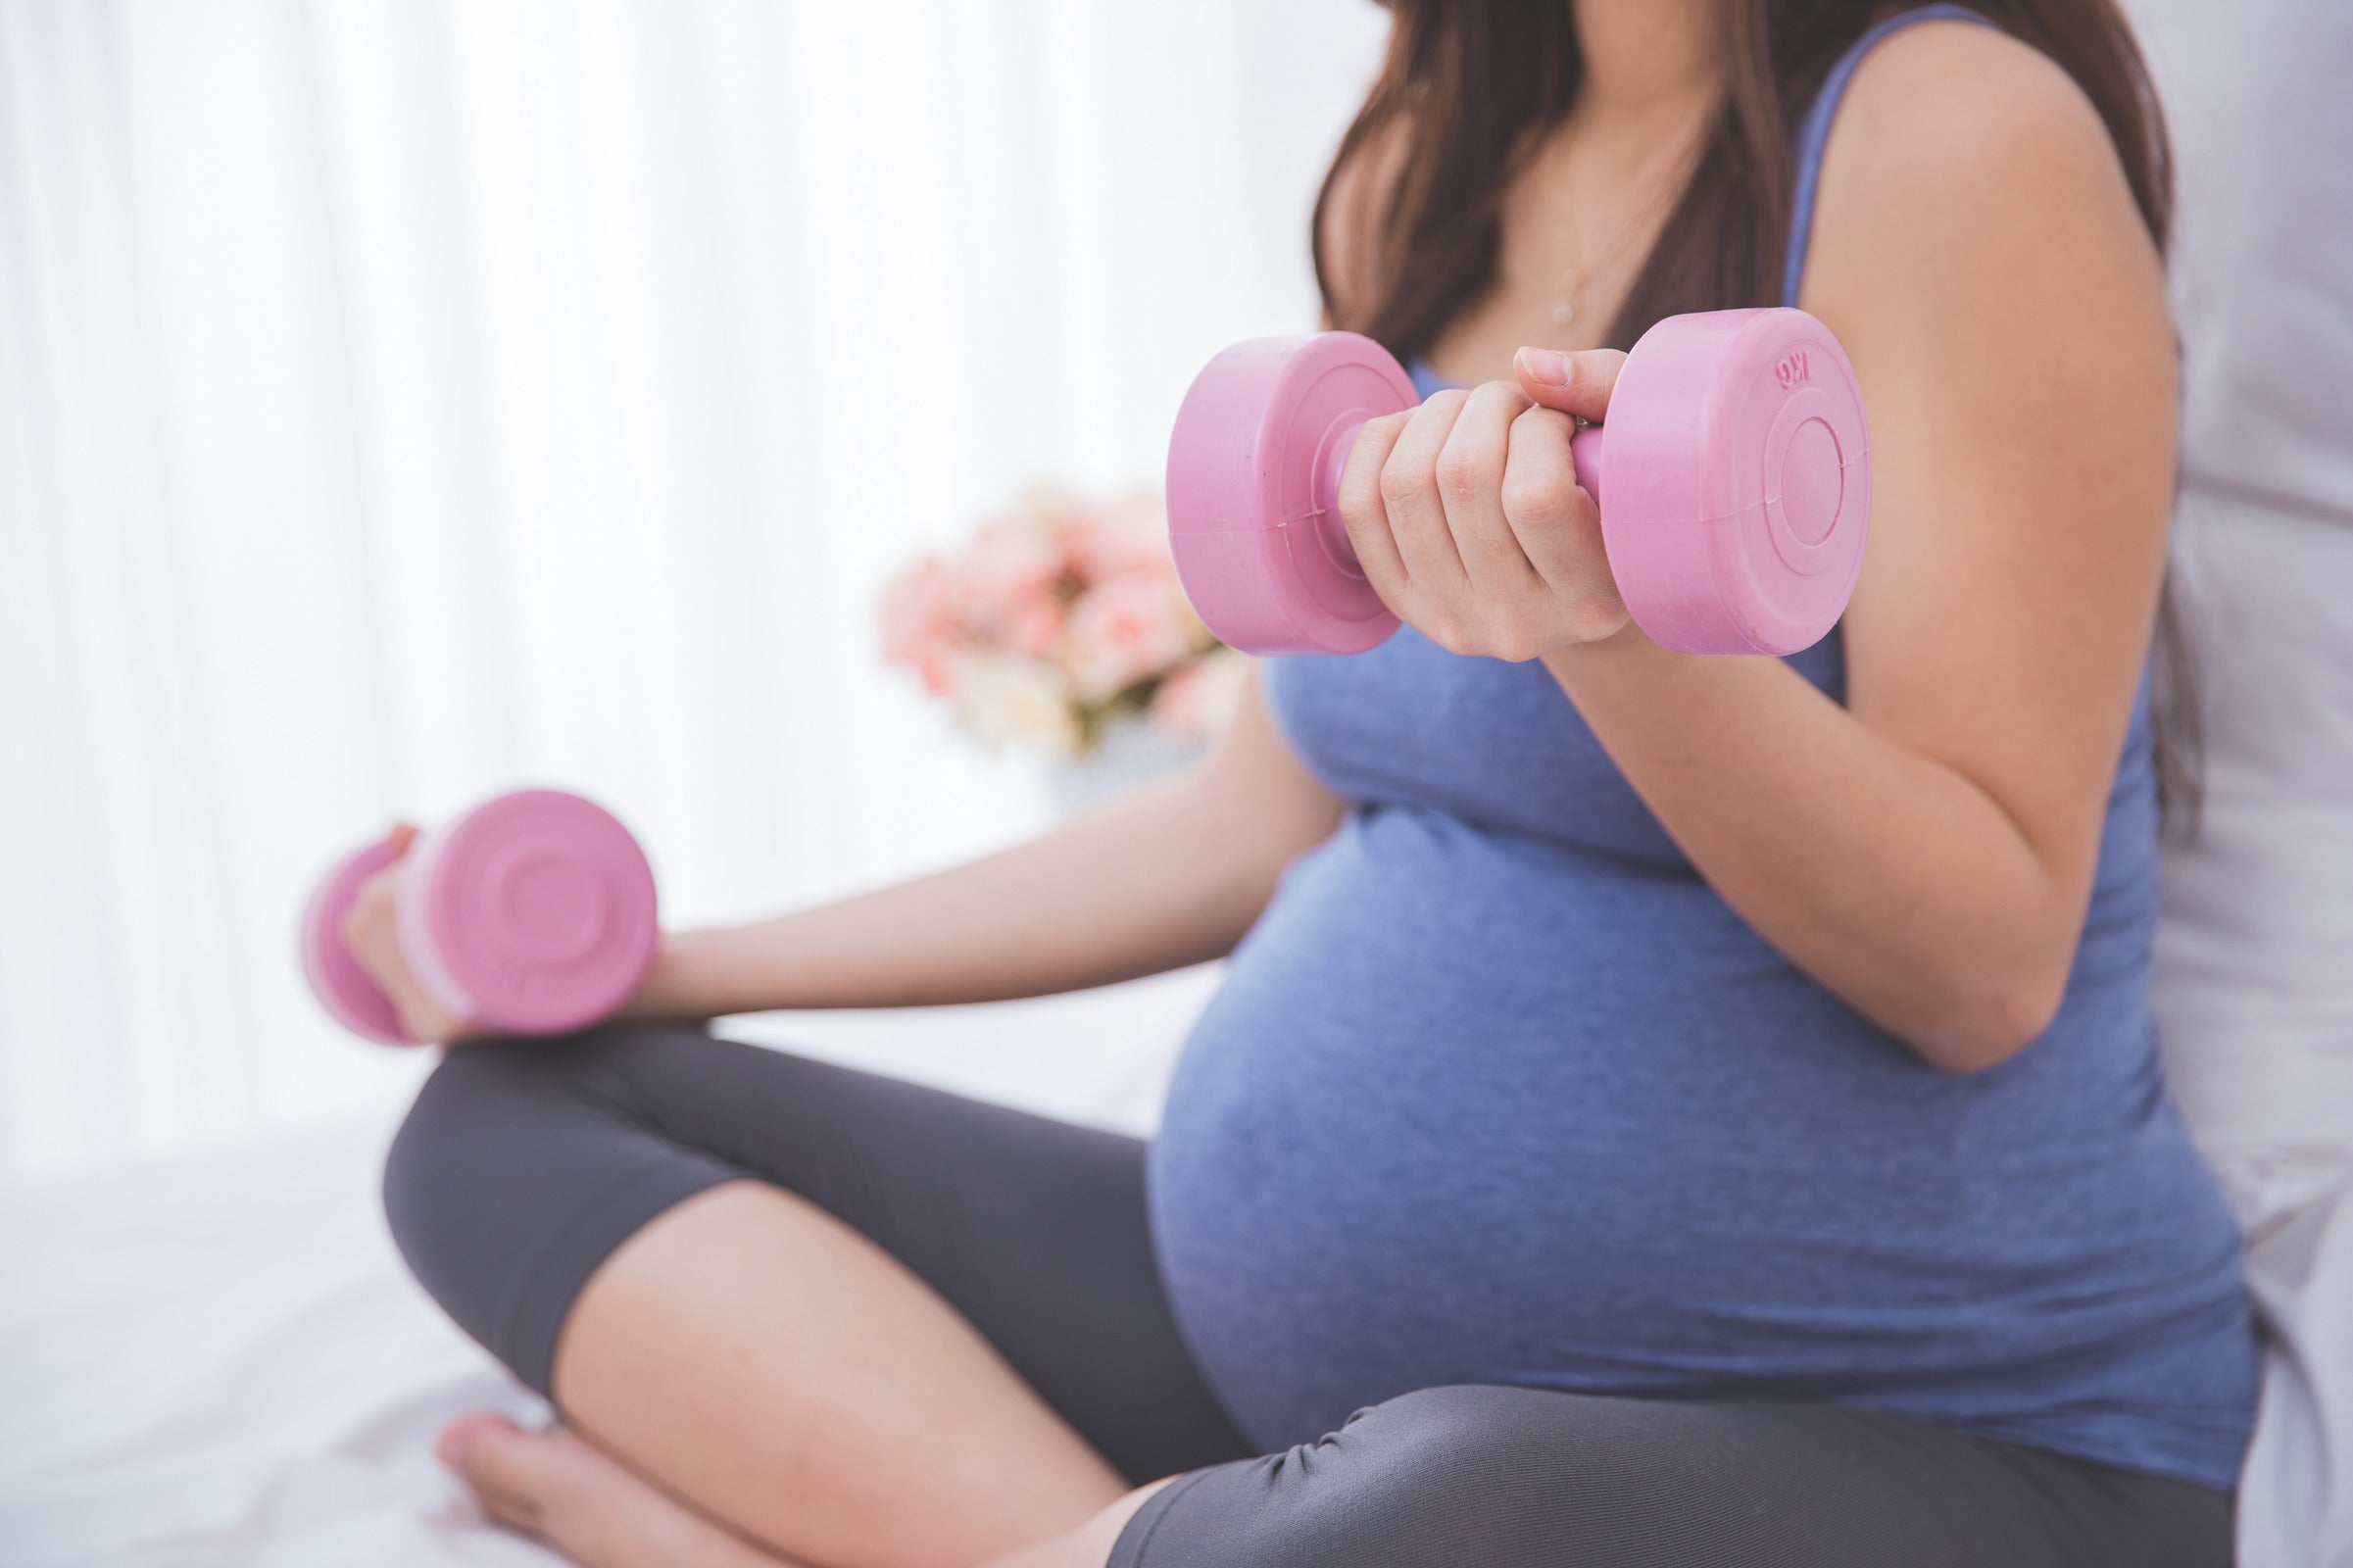 Ambien tanda hamil early pregnancy signs early pregnancy symptoms